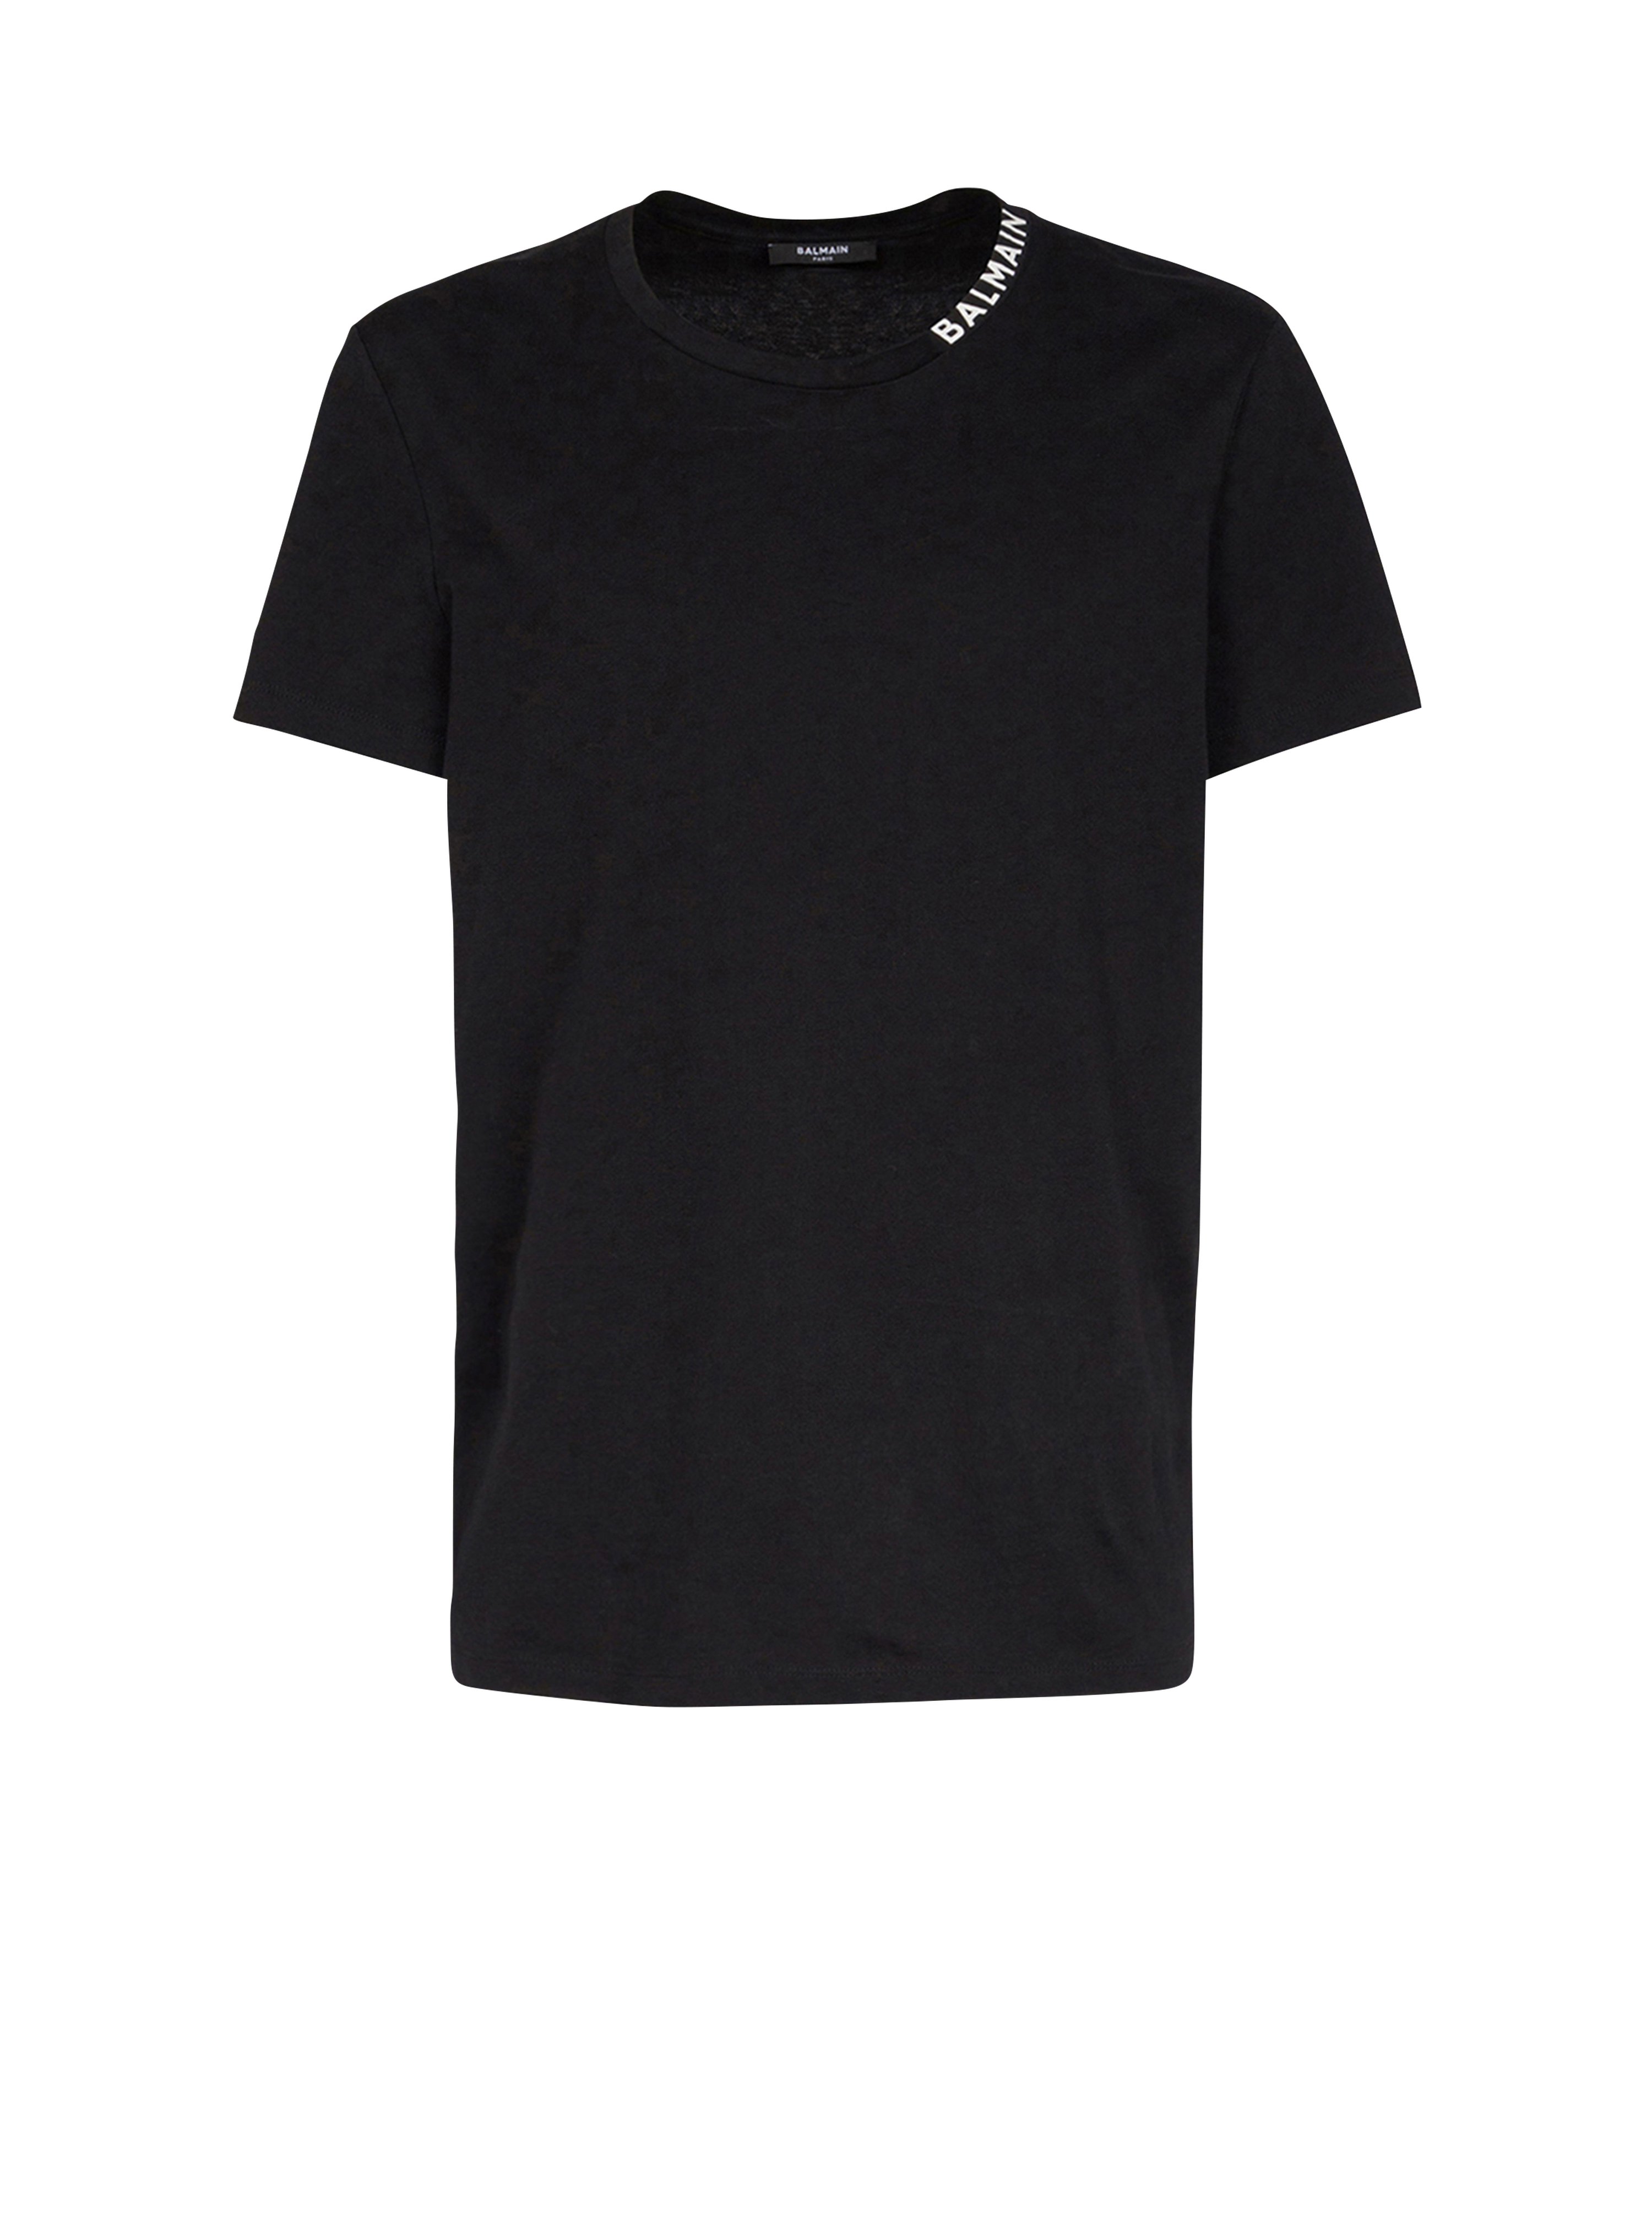 Cotton T-shirt with Balmain logo print neckline, black